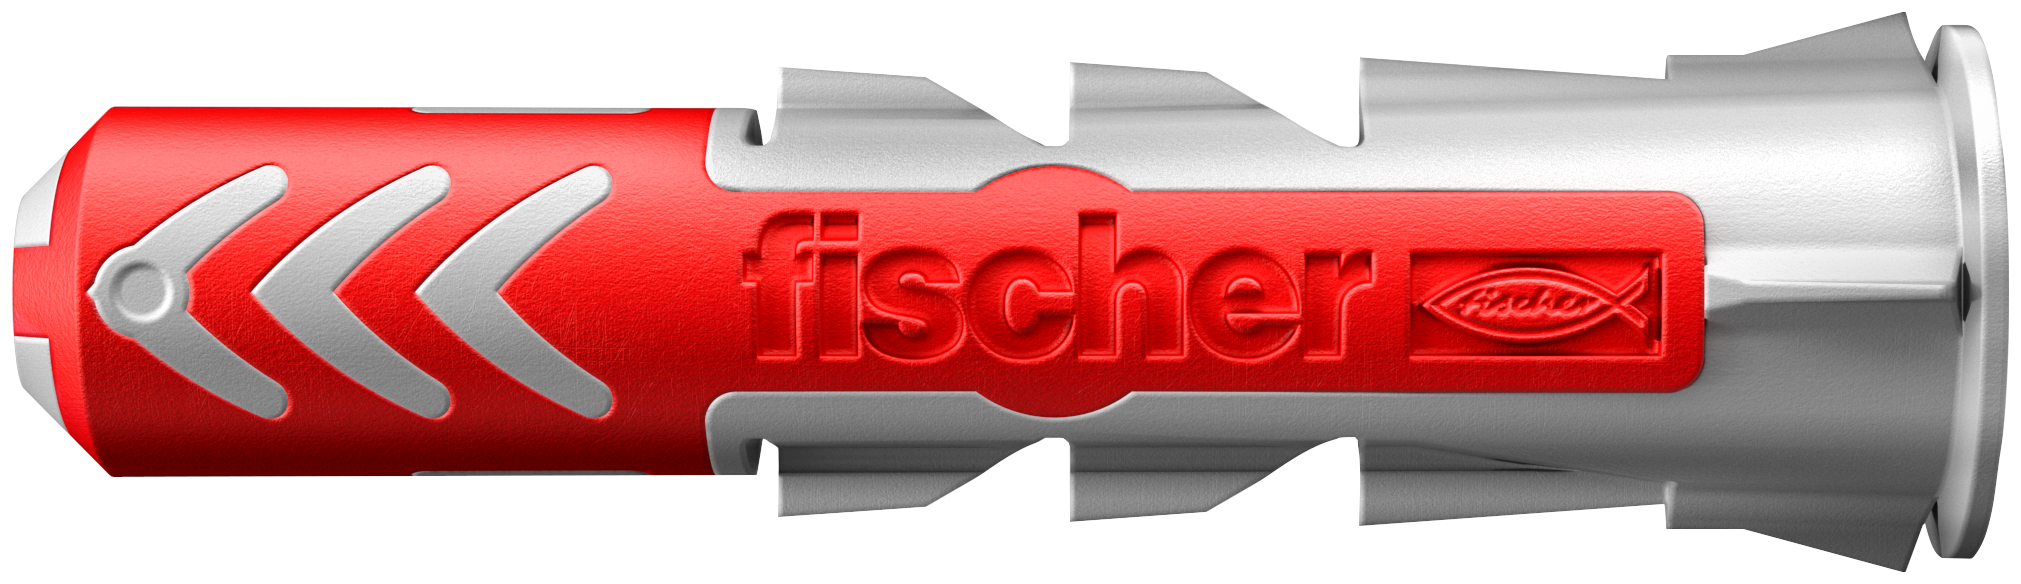 fischer Big Pack Tasselli DUOPOWER 8 (120 Tasselli) (120 Pz.) Busta di tasselli formato convenienza fie2850